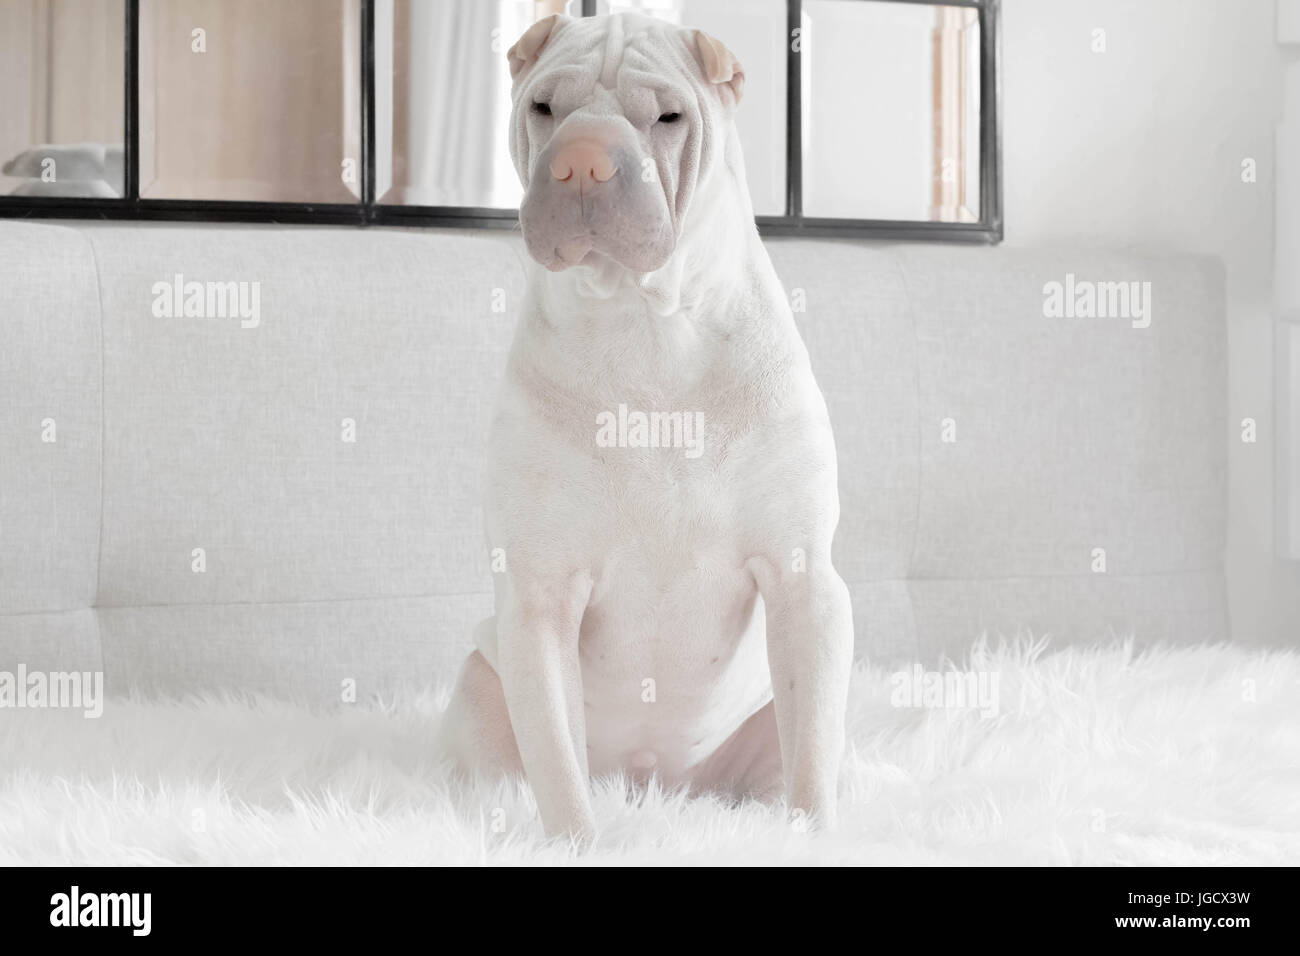 Shar-pei dog sitting on bed Banque D'Images